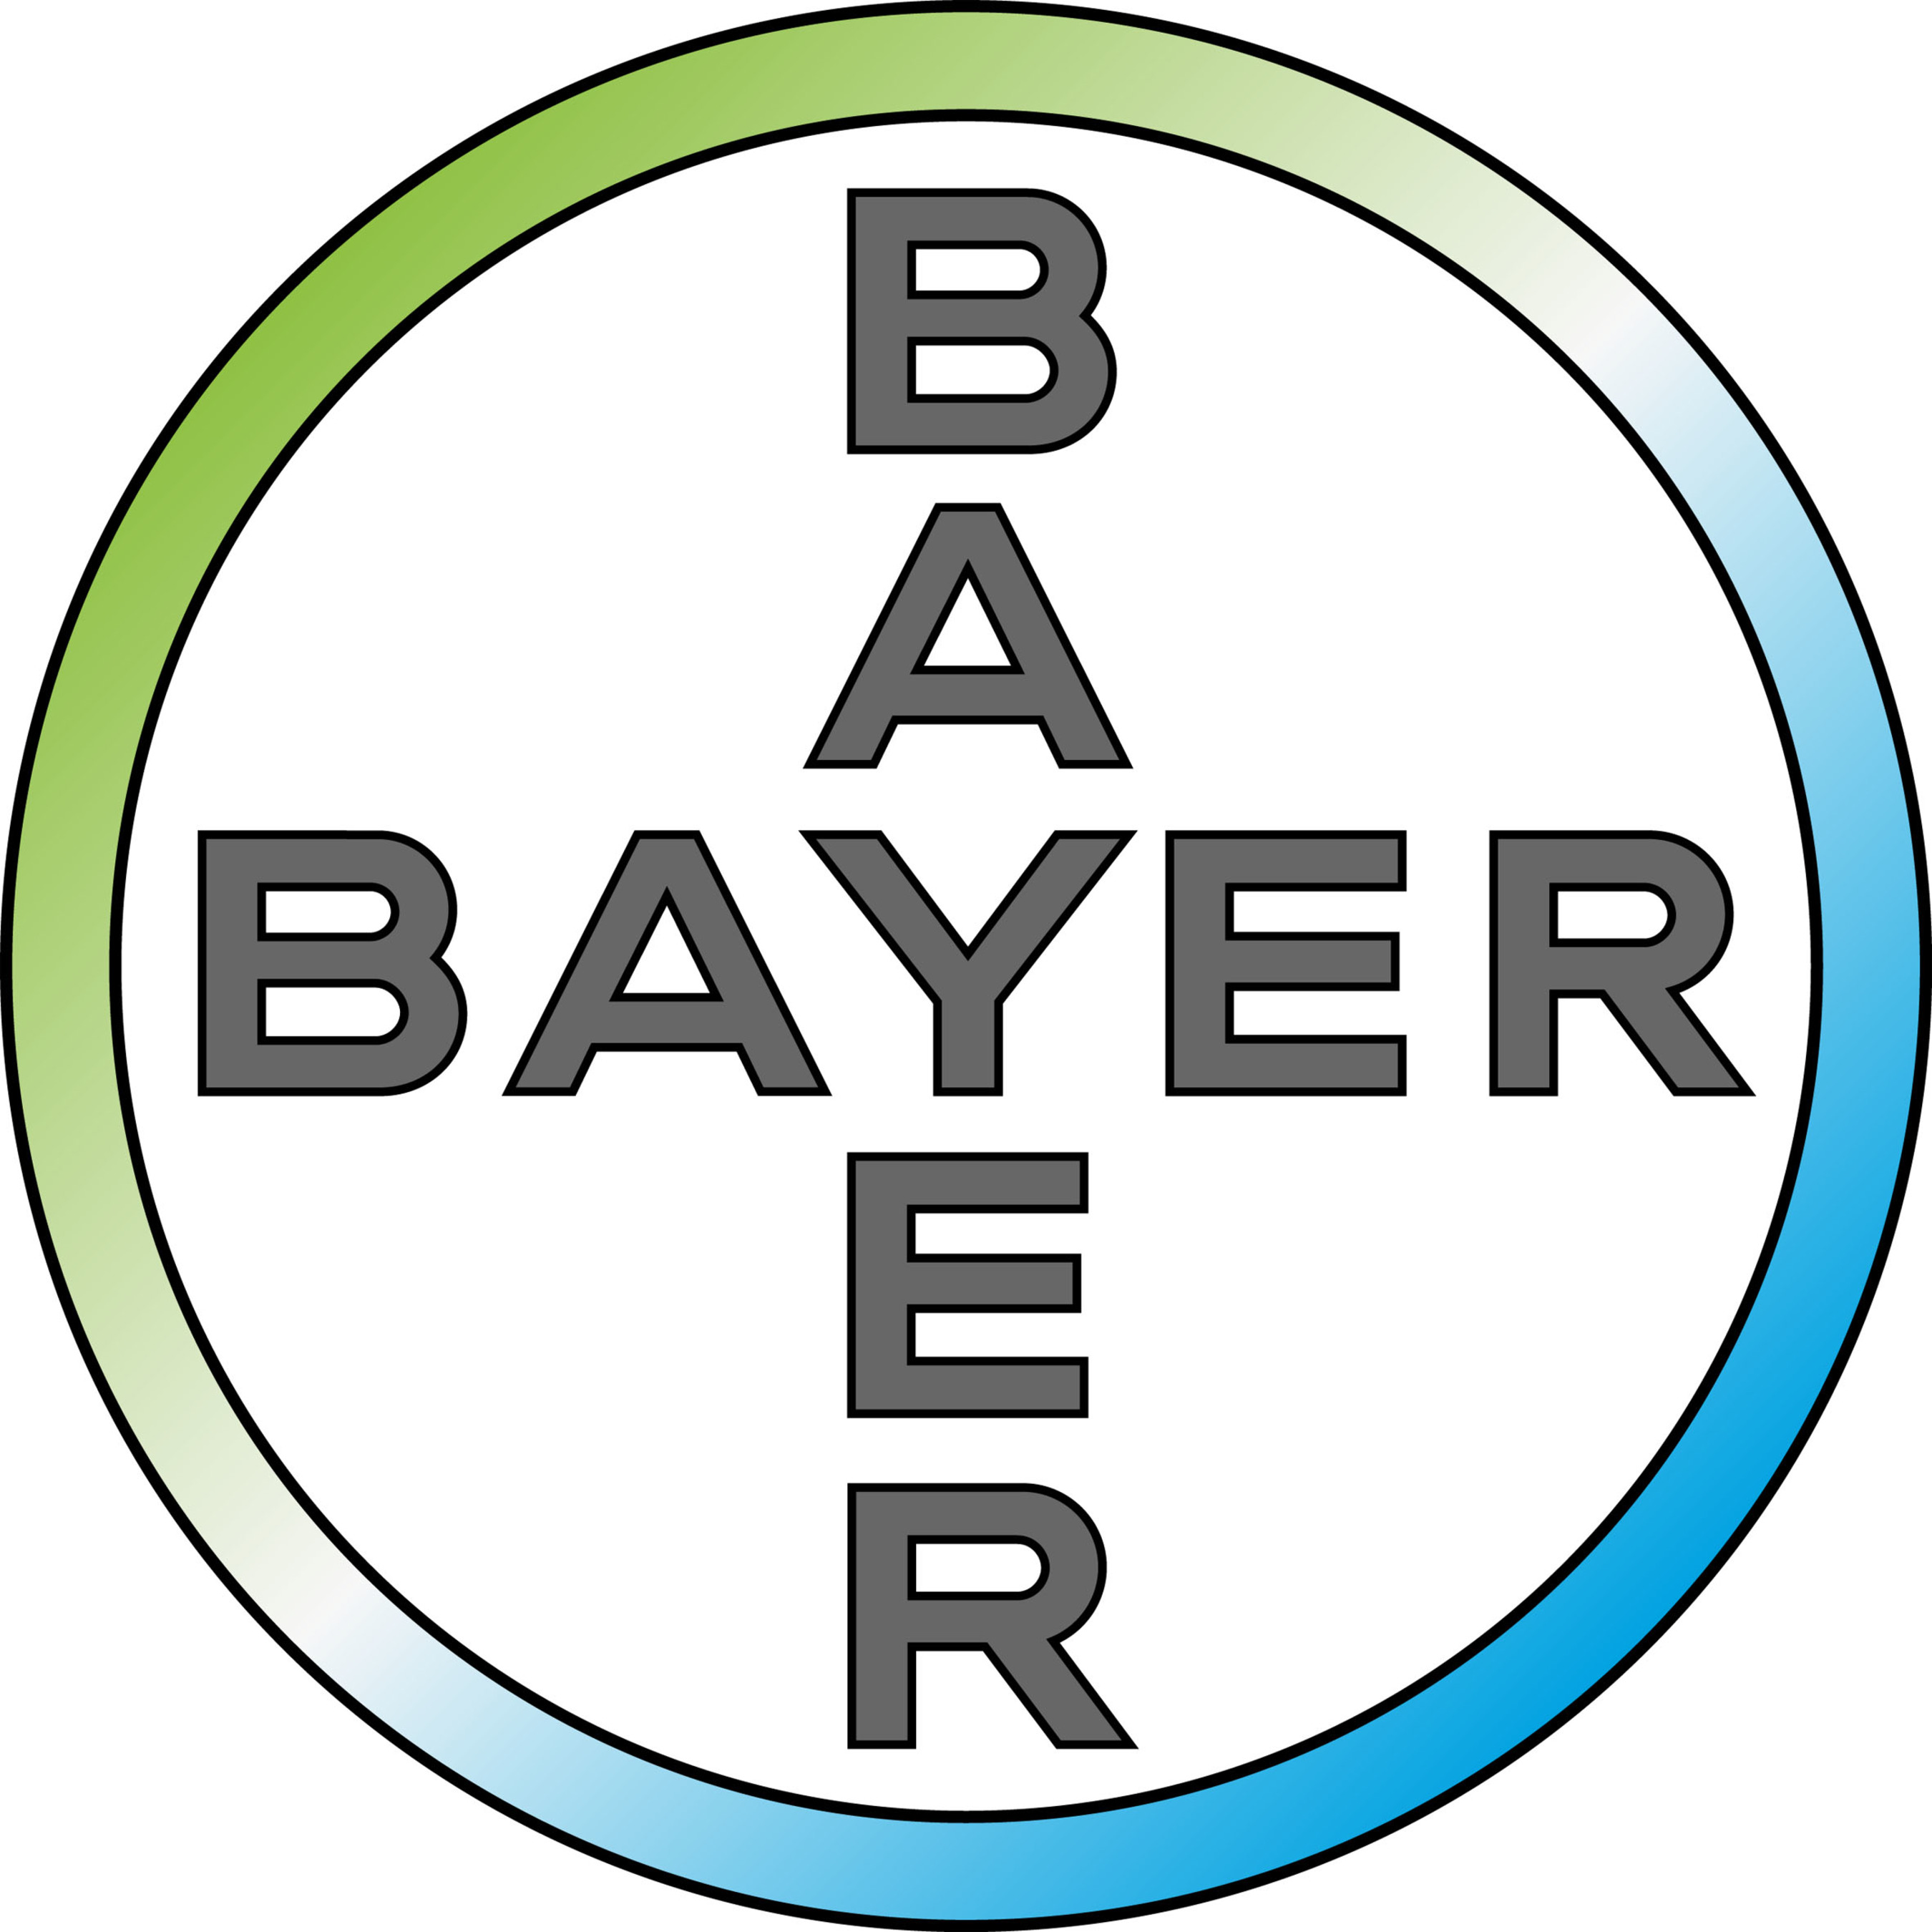 Bayer logo. (PRNewsFoto/Bayer HealthCare LLC Animal Health) (PRNewsFoto/BAYER HEALTHCARE LLC ANIMAL...)